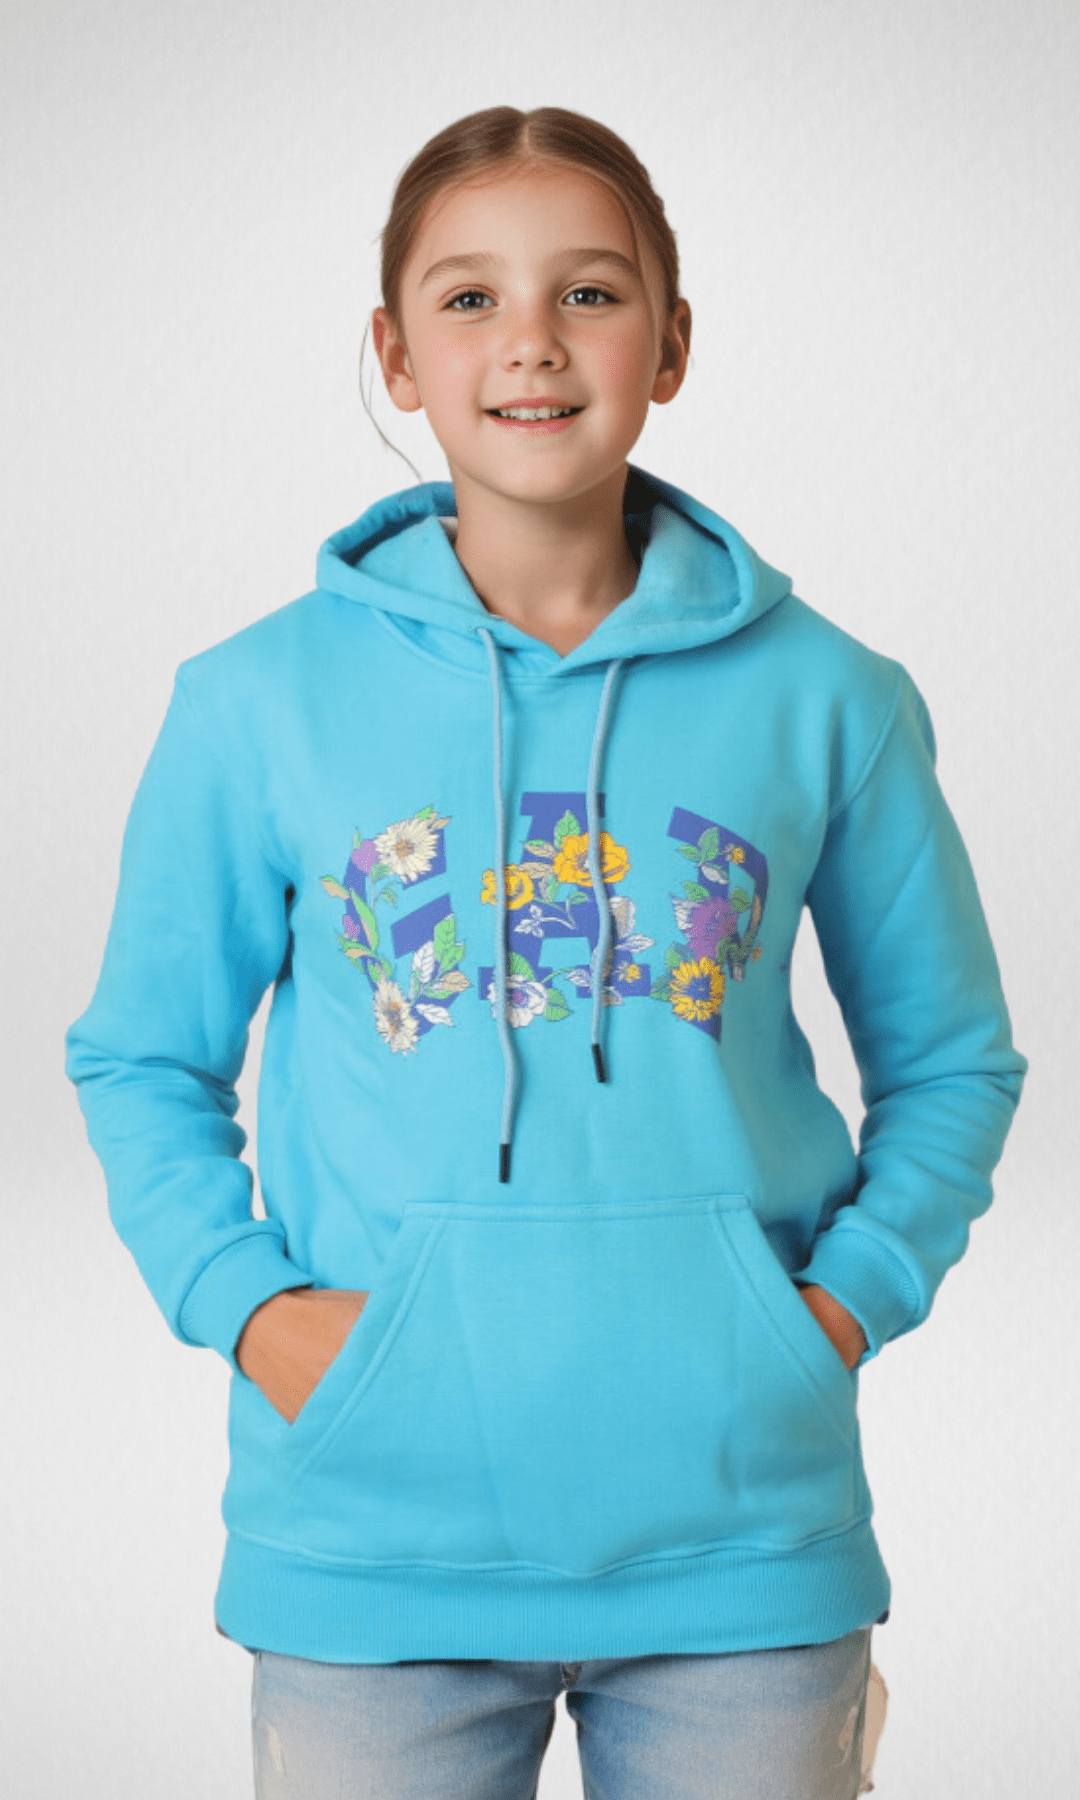 Kids Winter 24 Kids Sweatshirt Kids New Hoodie With Flower Logo - Baby Blue